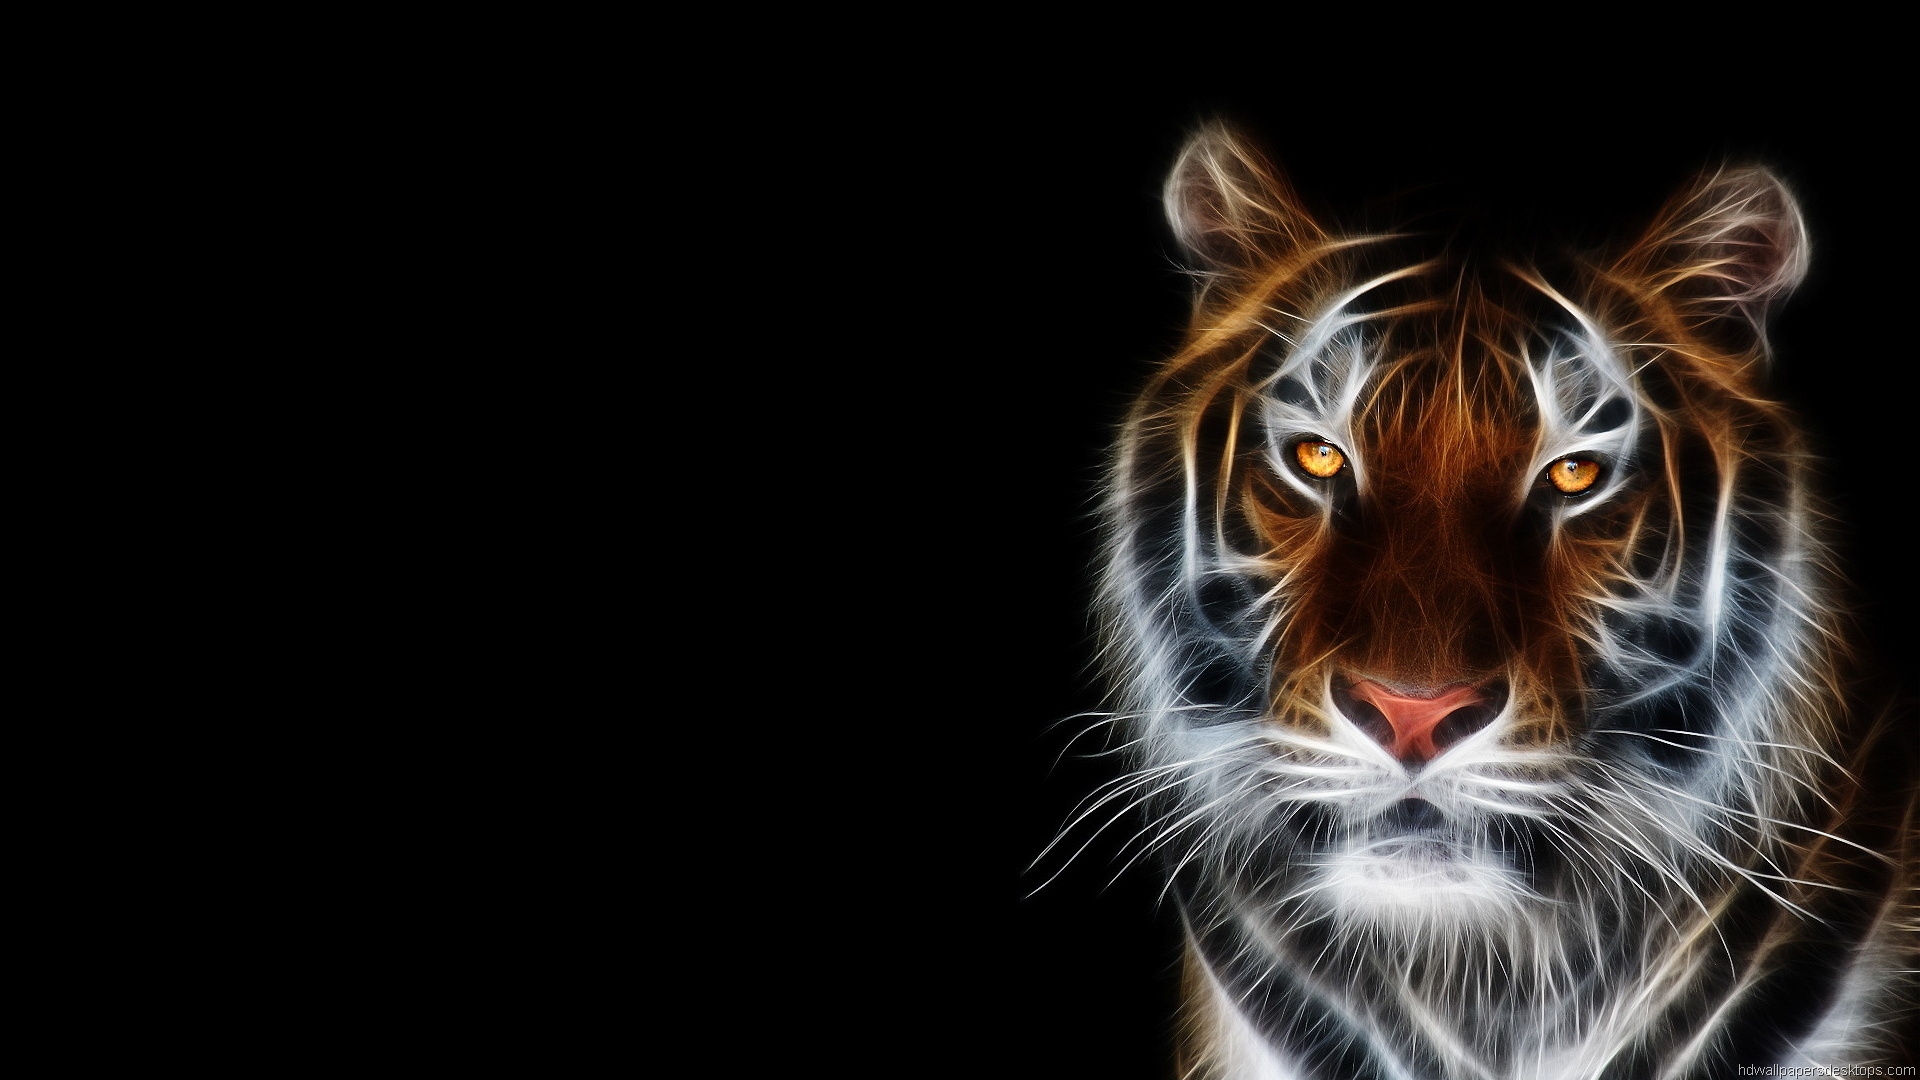 ANIMALS ANIMATED TIGER DESKTOP BACKGROUND WALLPAPER (1080p) - HD IMAGE